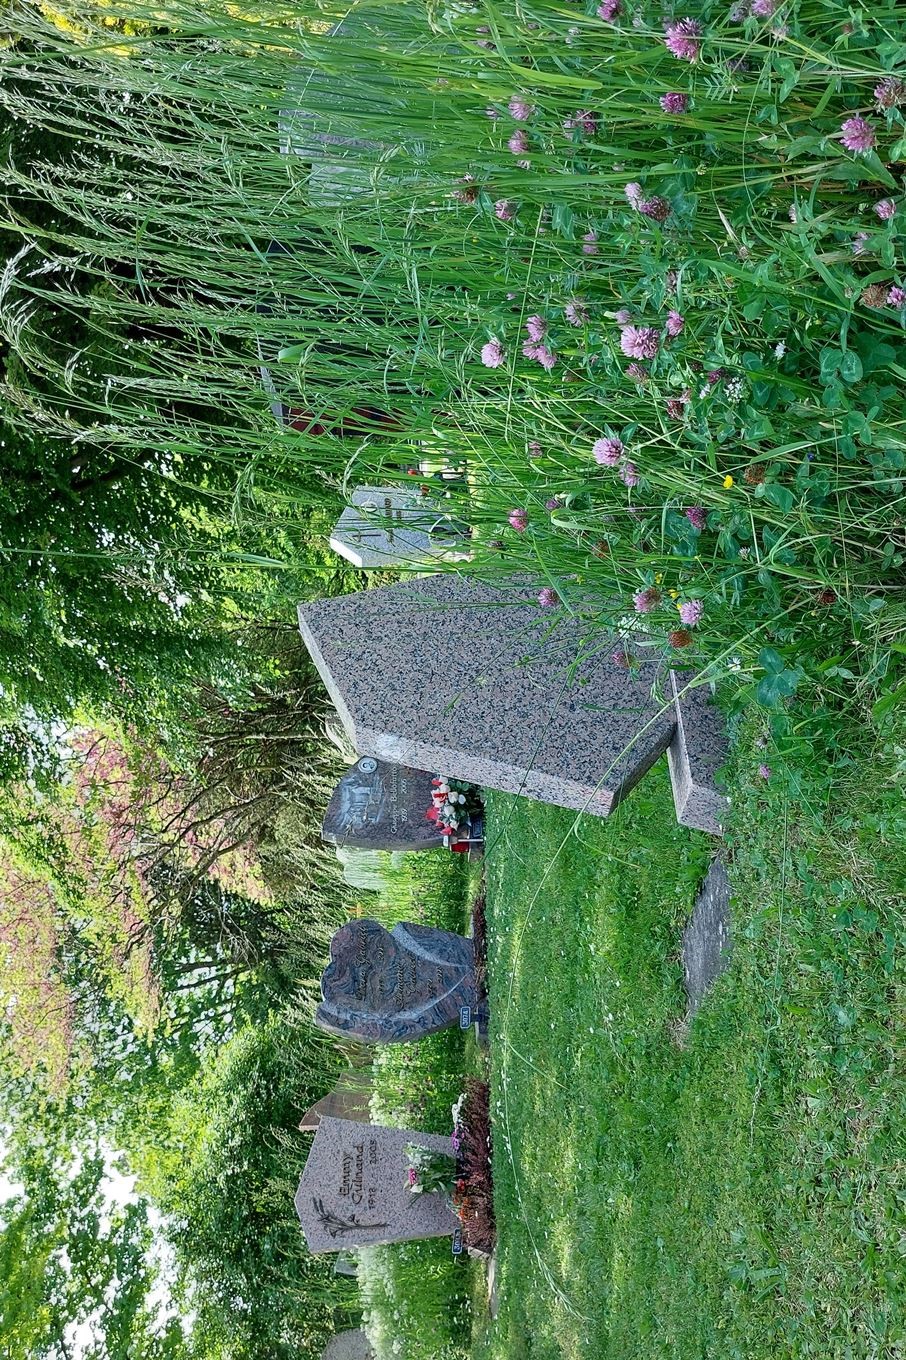 Image d'illustration de tombes